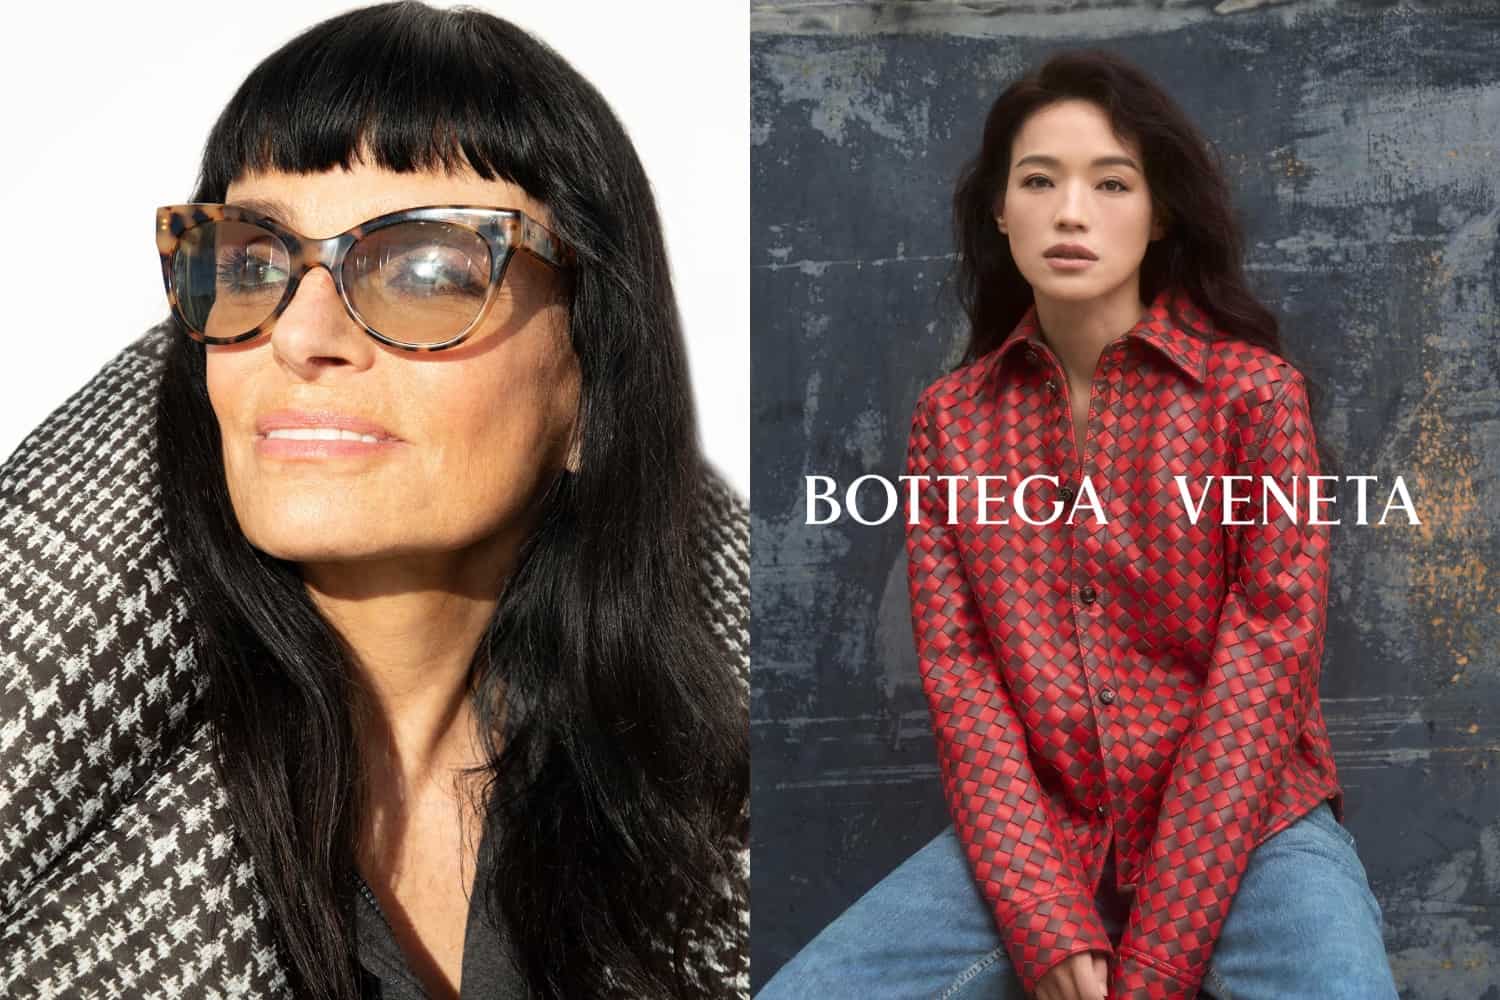 Bottega Veneta announces Shu Qi as its new global brand ambassador